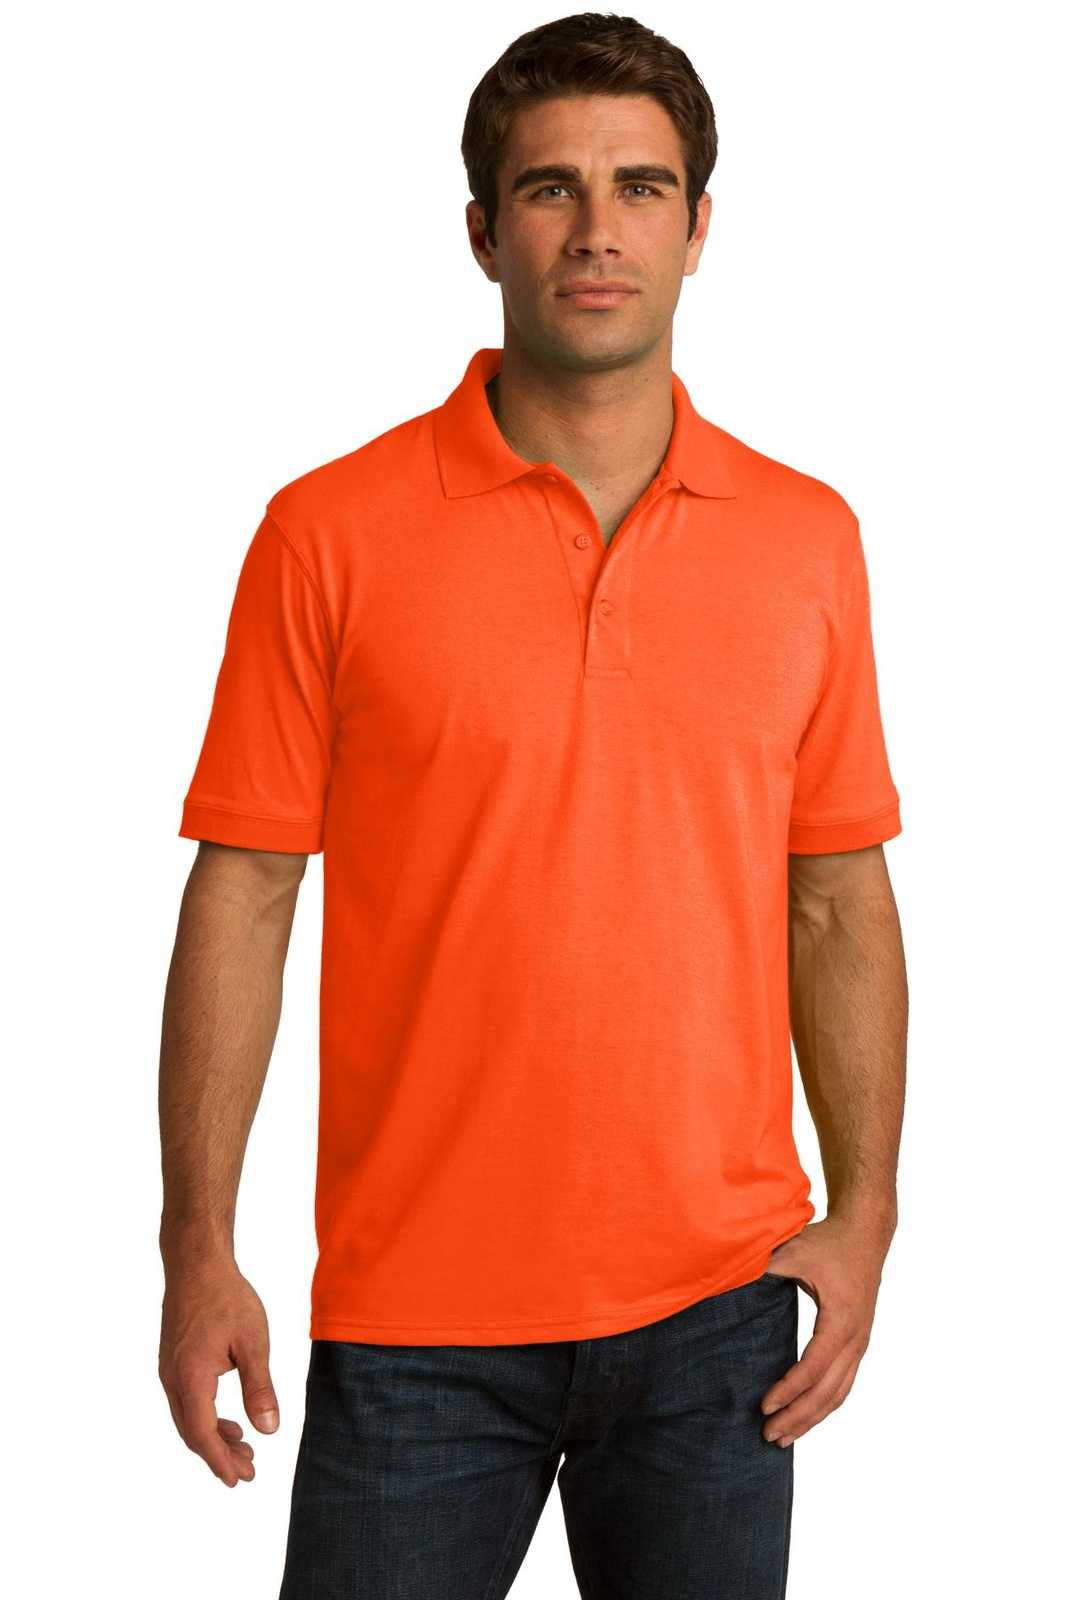 Port &amp; Company KP55 Core Blend Jersey Knit Polo - Safety Orange - HIT a Double - 1